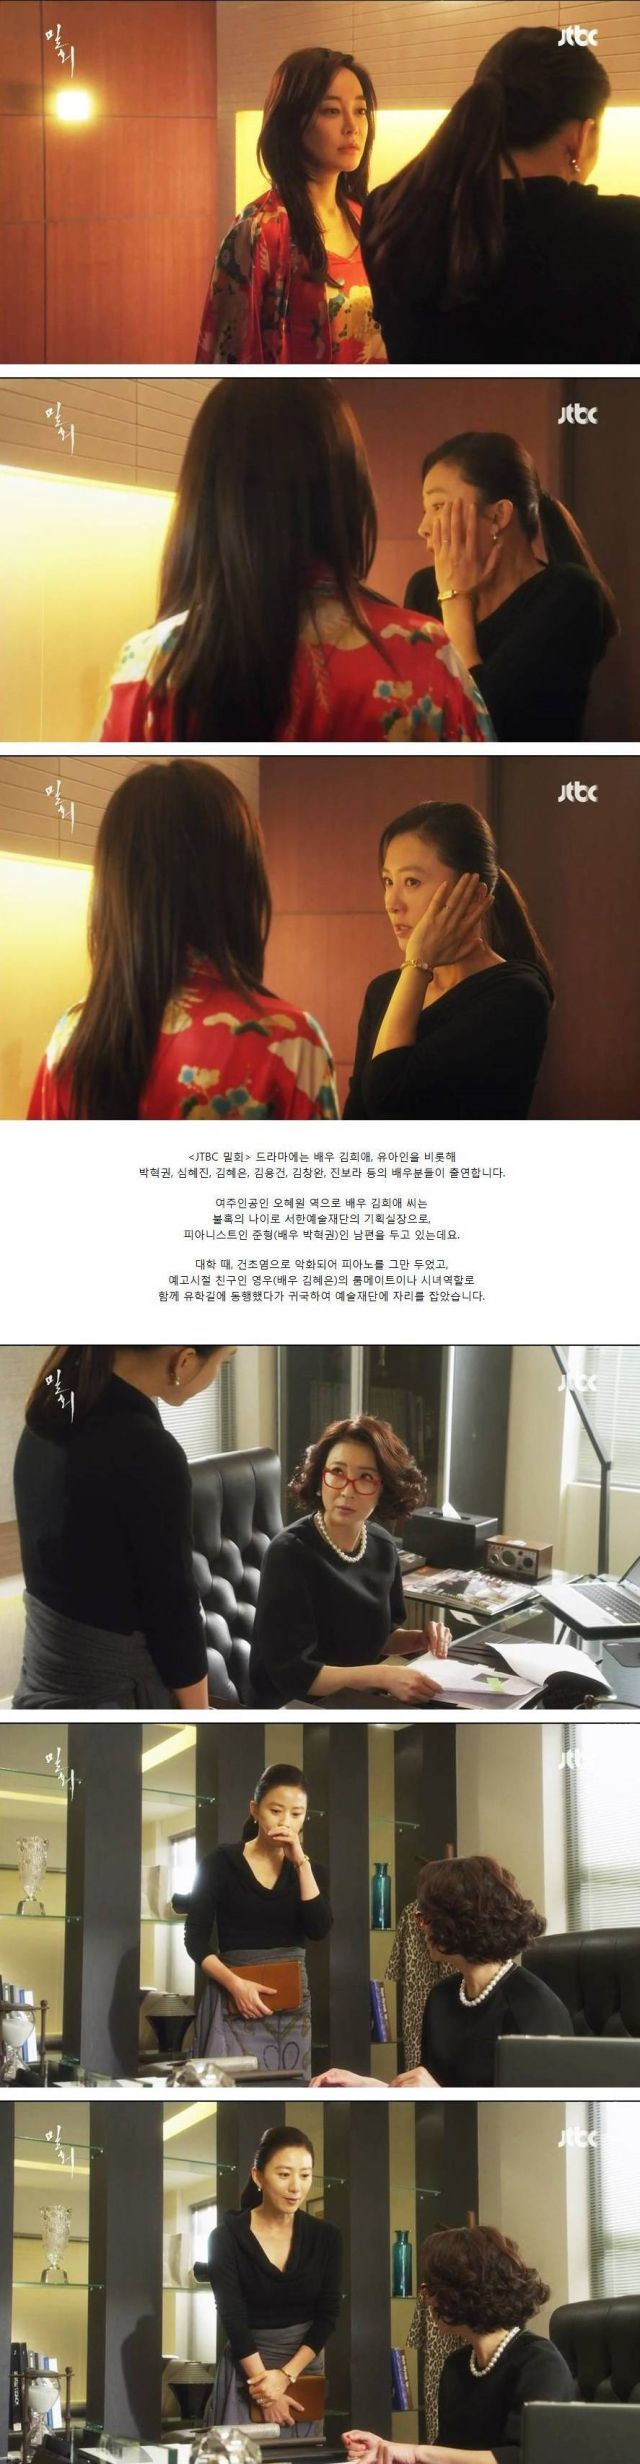 episode 1 captures for the Korean drama 'Secret Love Affair'